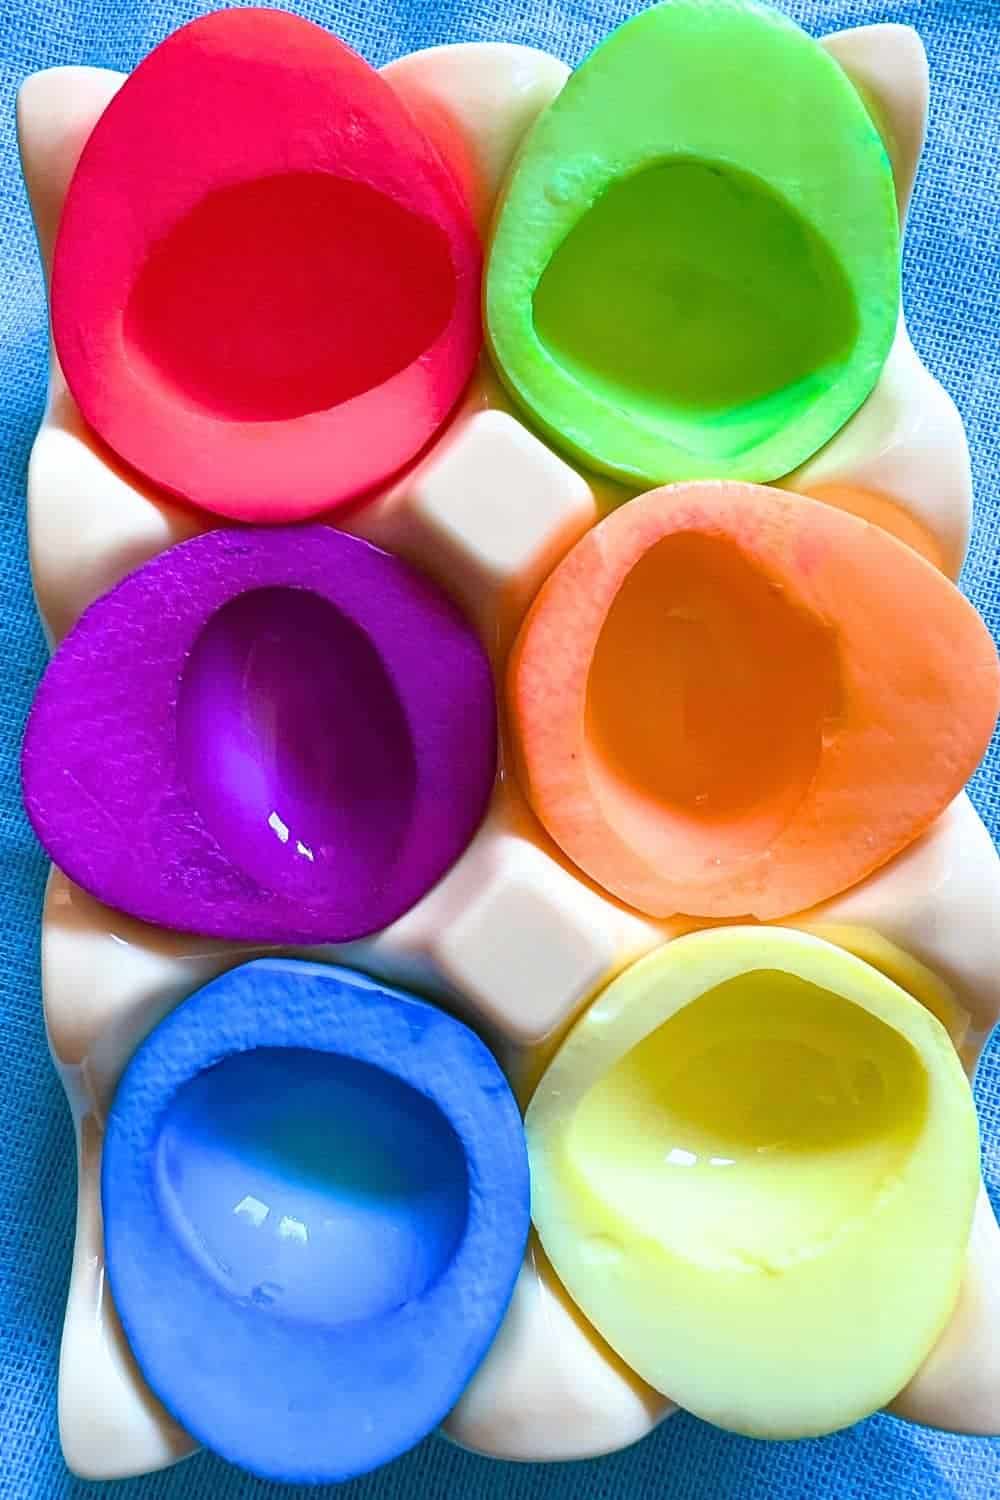 Color Dyed Egg Recipe EGG WHITES DYE - different colored egg whites sitting in an egg holder